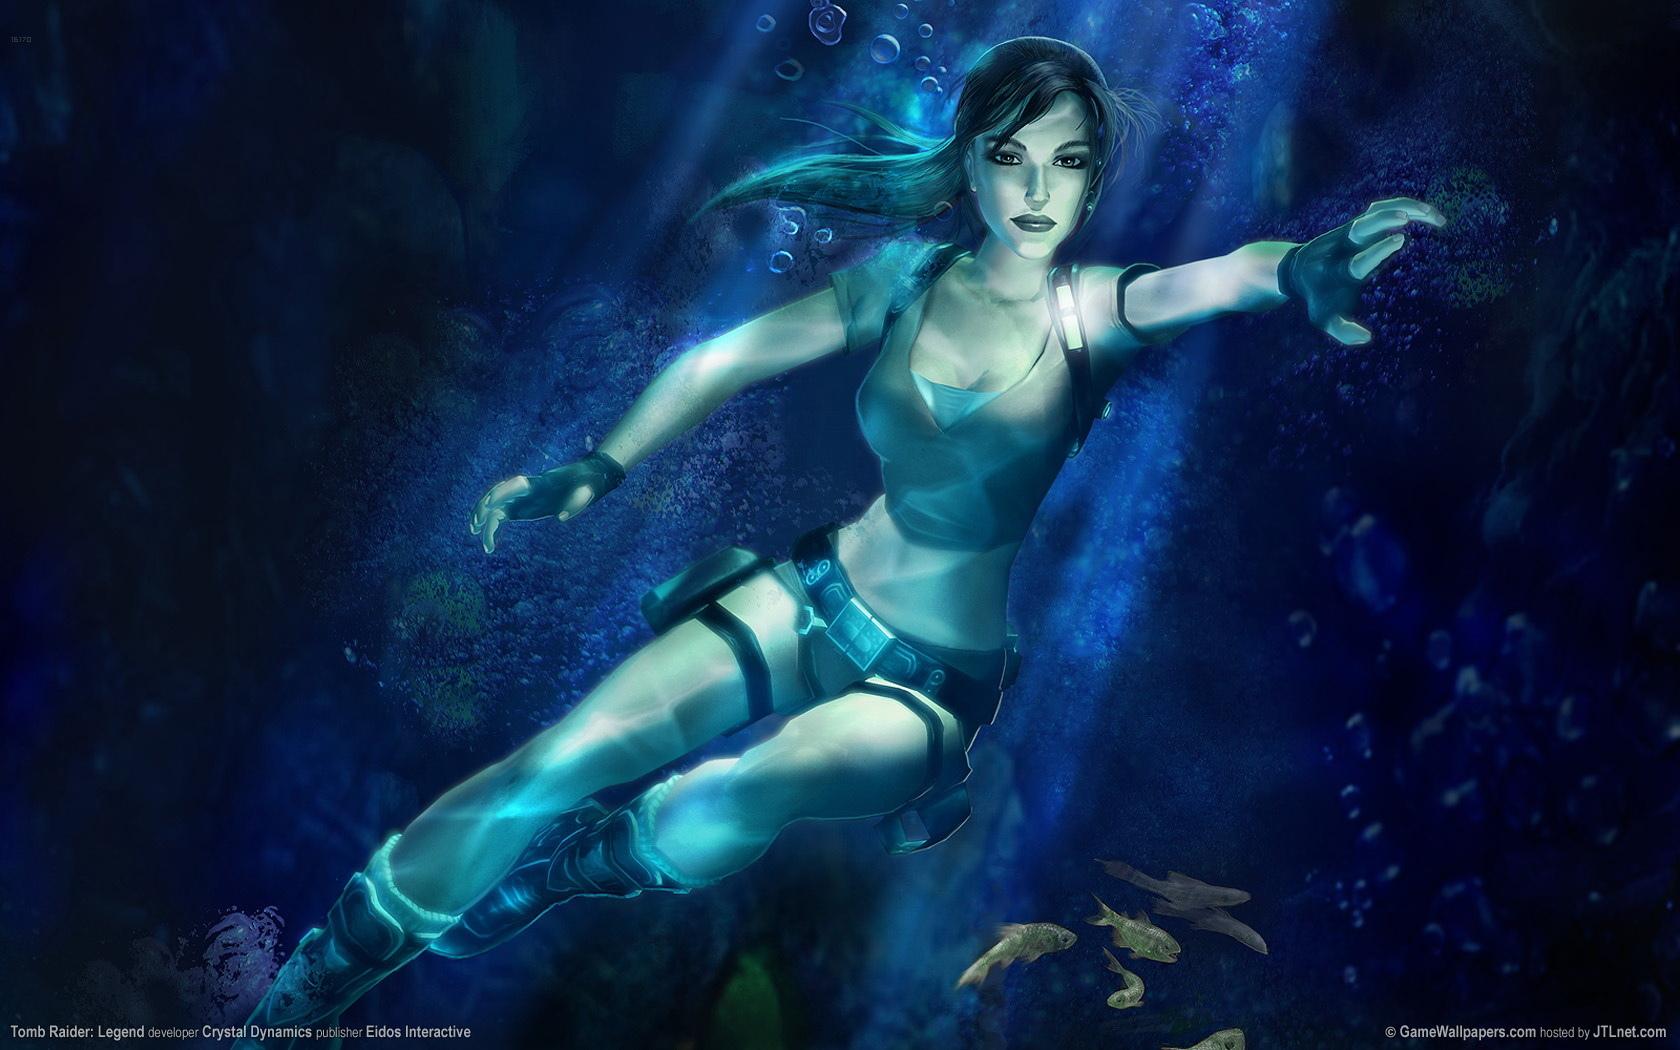 Tomb Raider Legend at 1024 x 1024 iPad size wallpapers HD quality